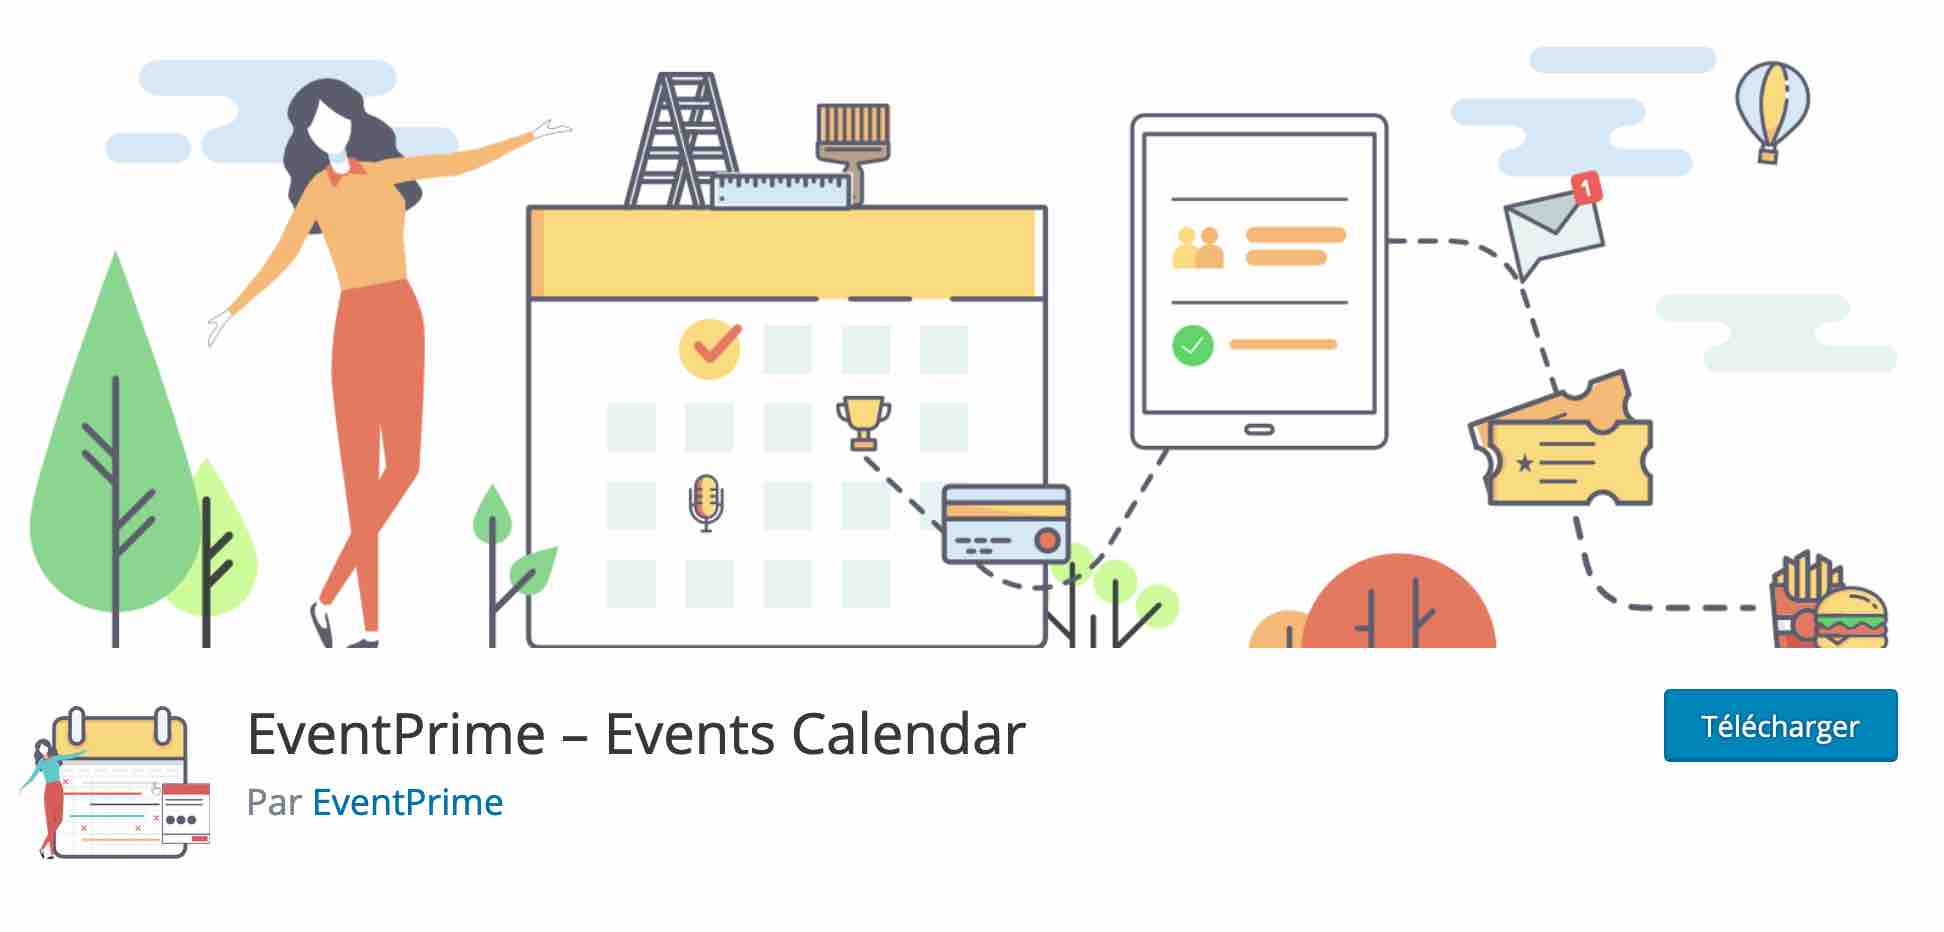 EventPrime - Events Calendar